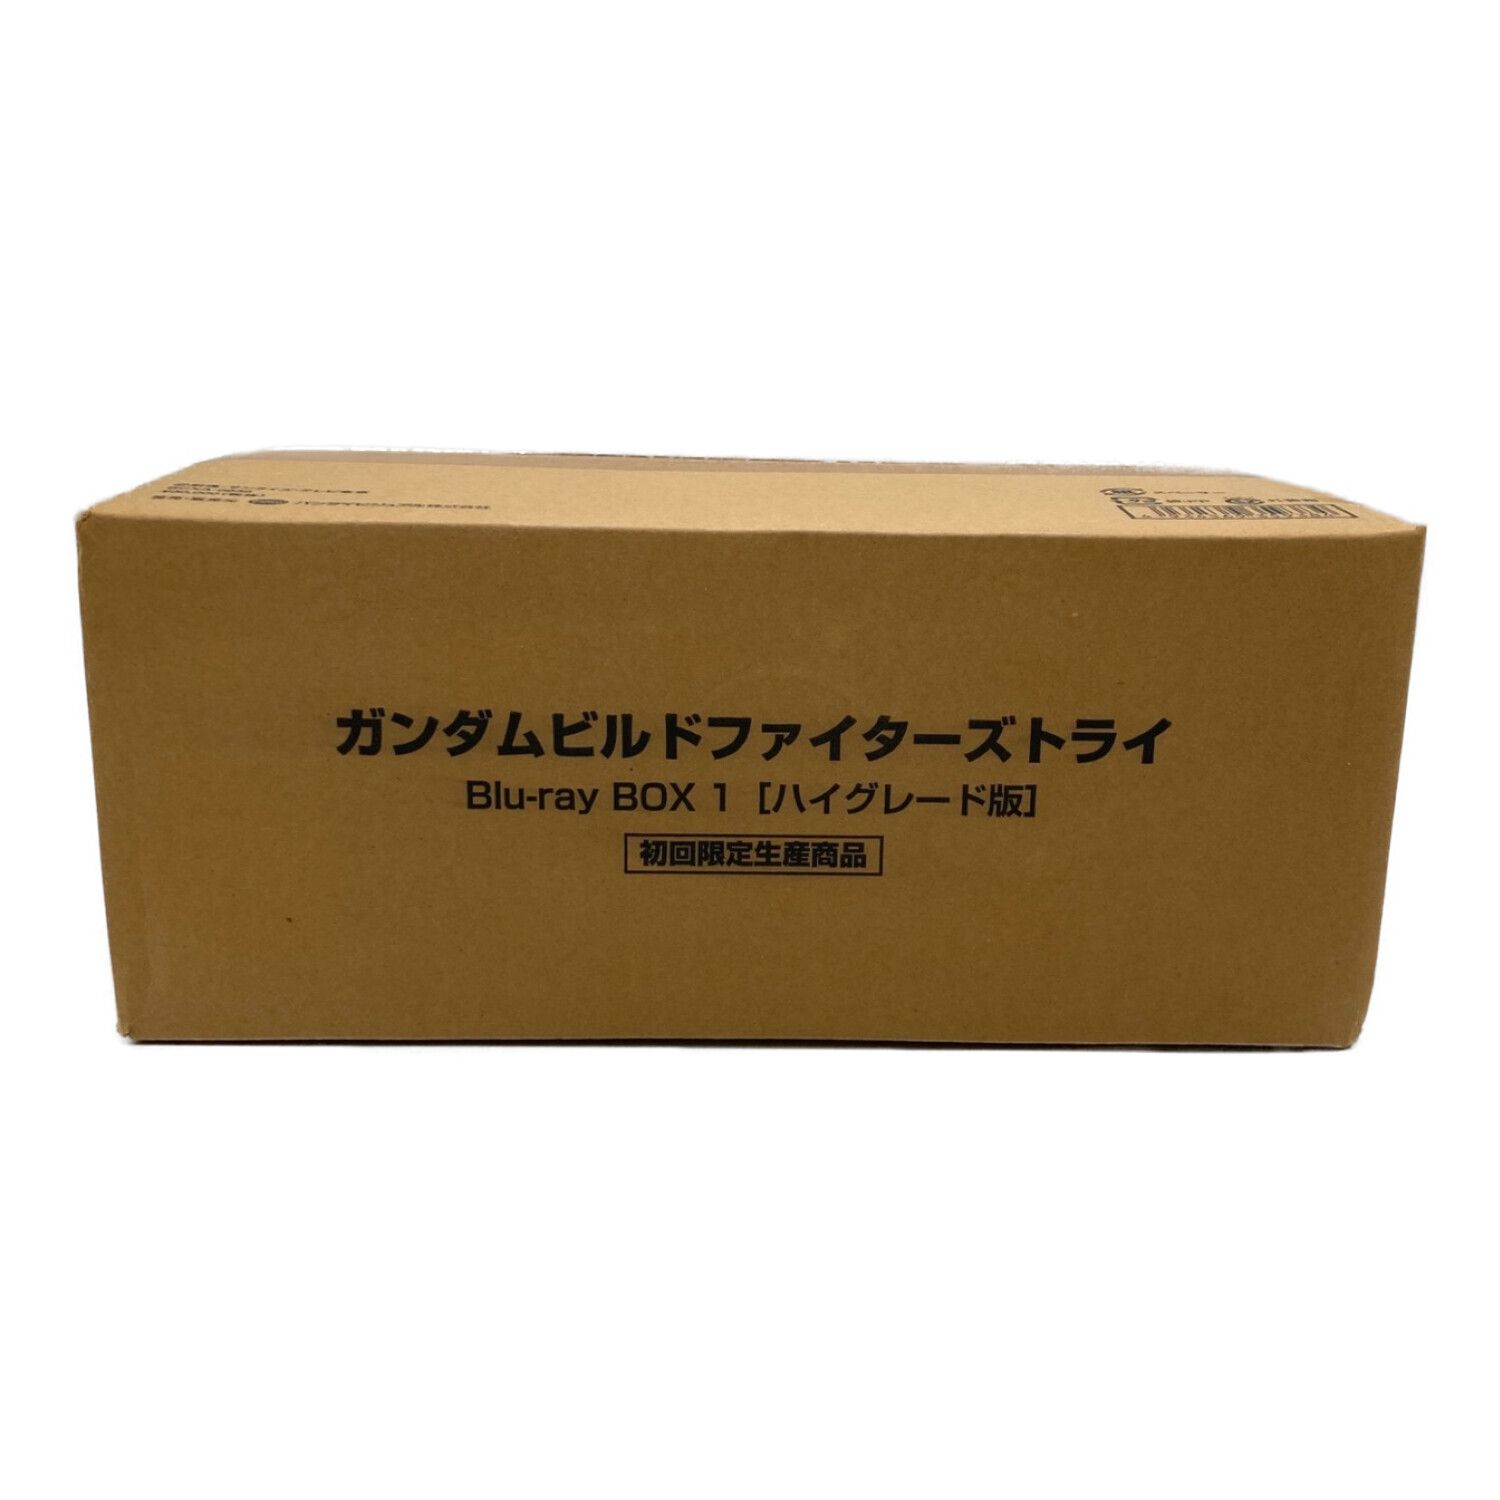 BANDAI (バンダイ) ガンダムビルドファイターズトライ blu-ray box 1